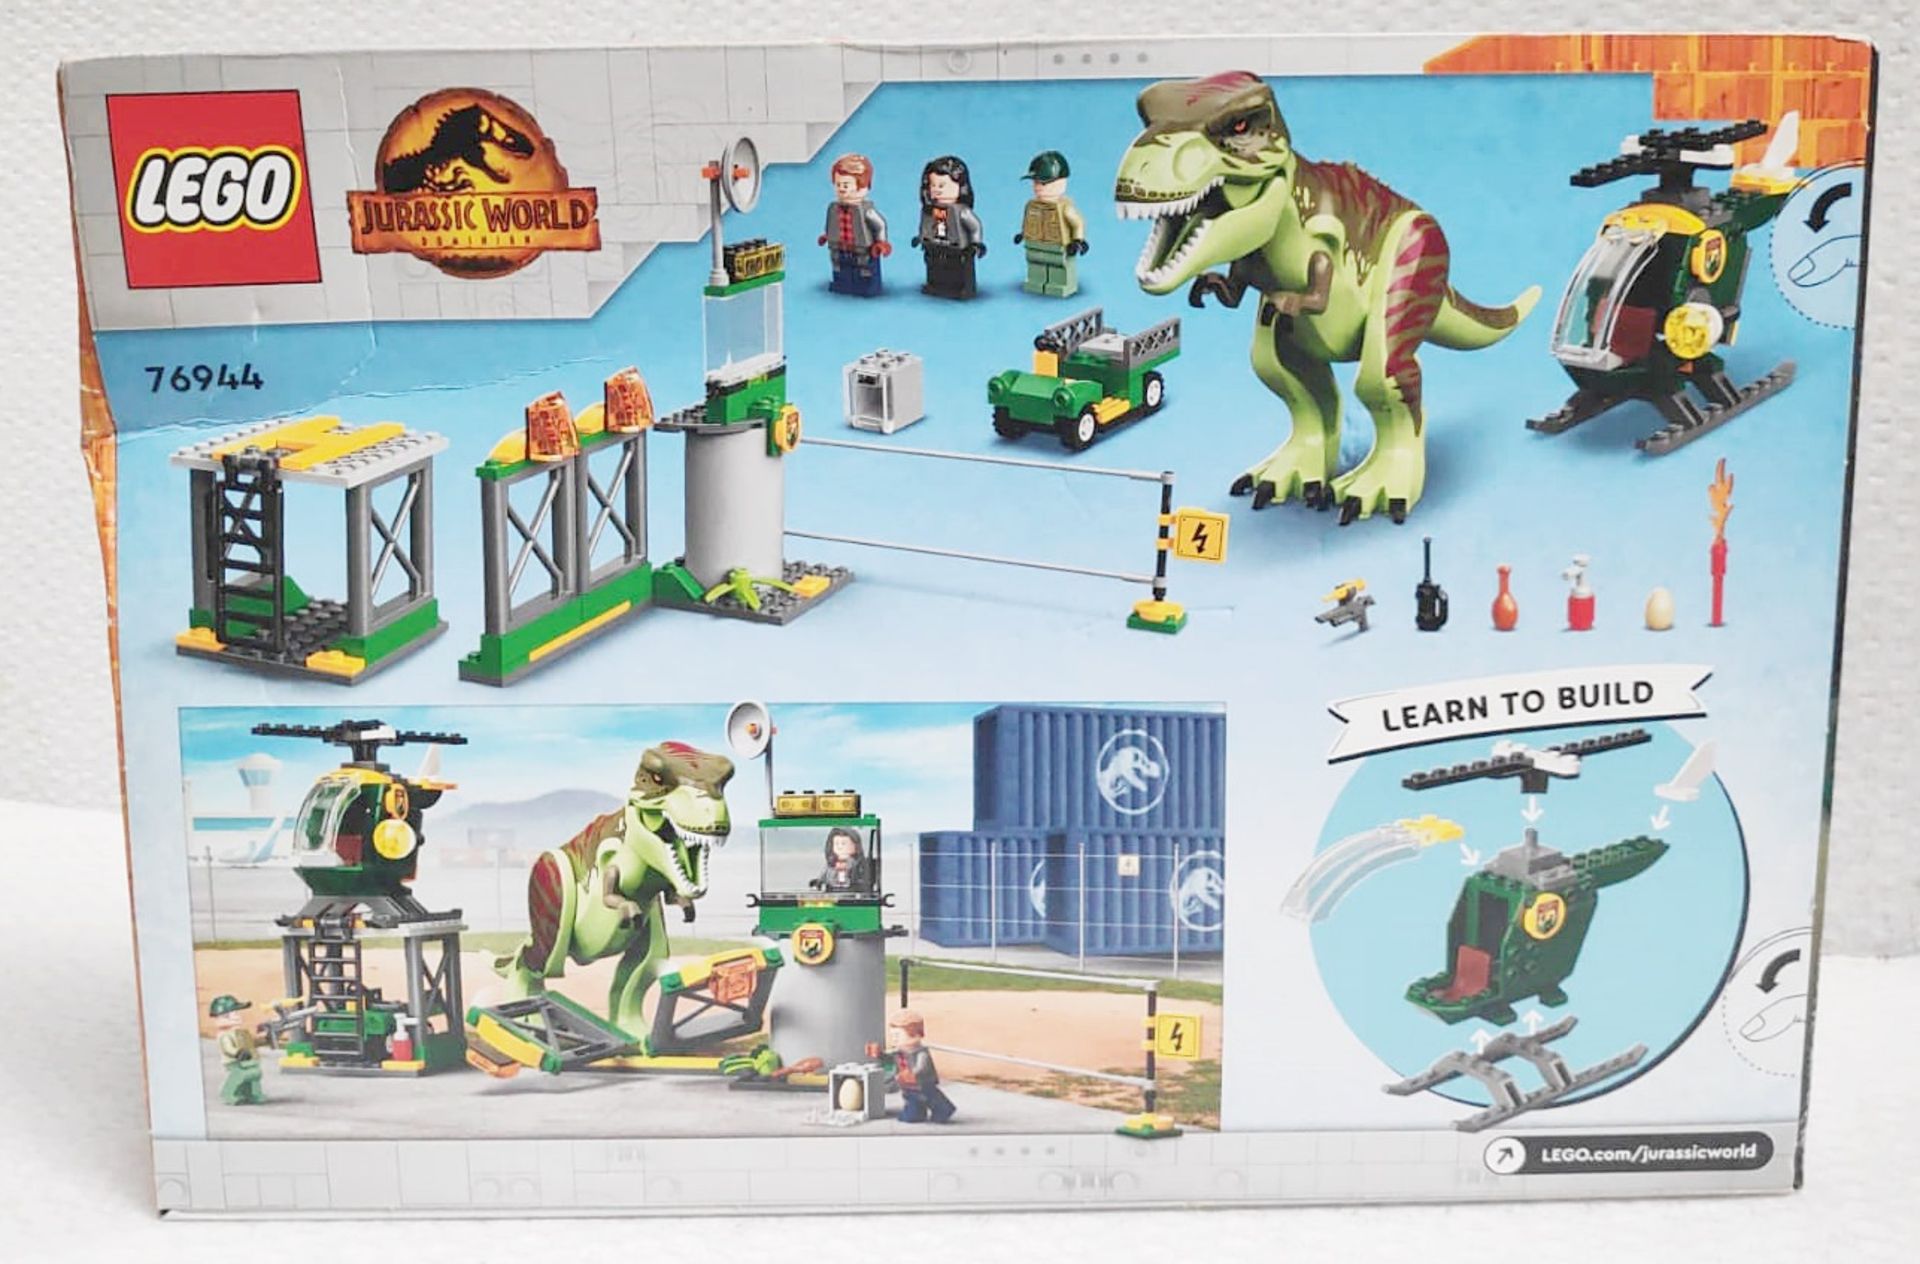 1 x LEGO Jurassic World T-Rex Dinosaur Breakout Set (76944) - Original Price £44.95 - Unused Boxed - Image 2 of 2